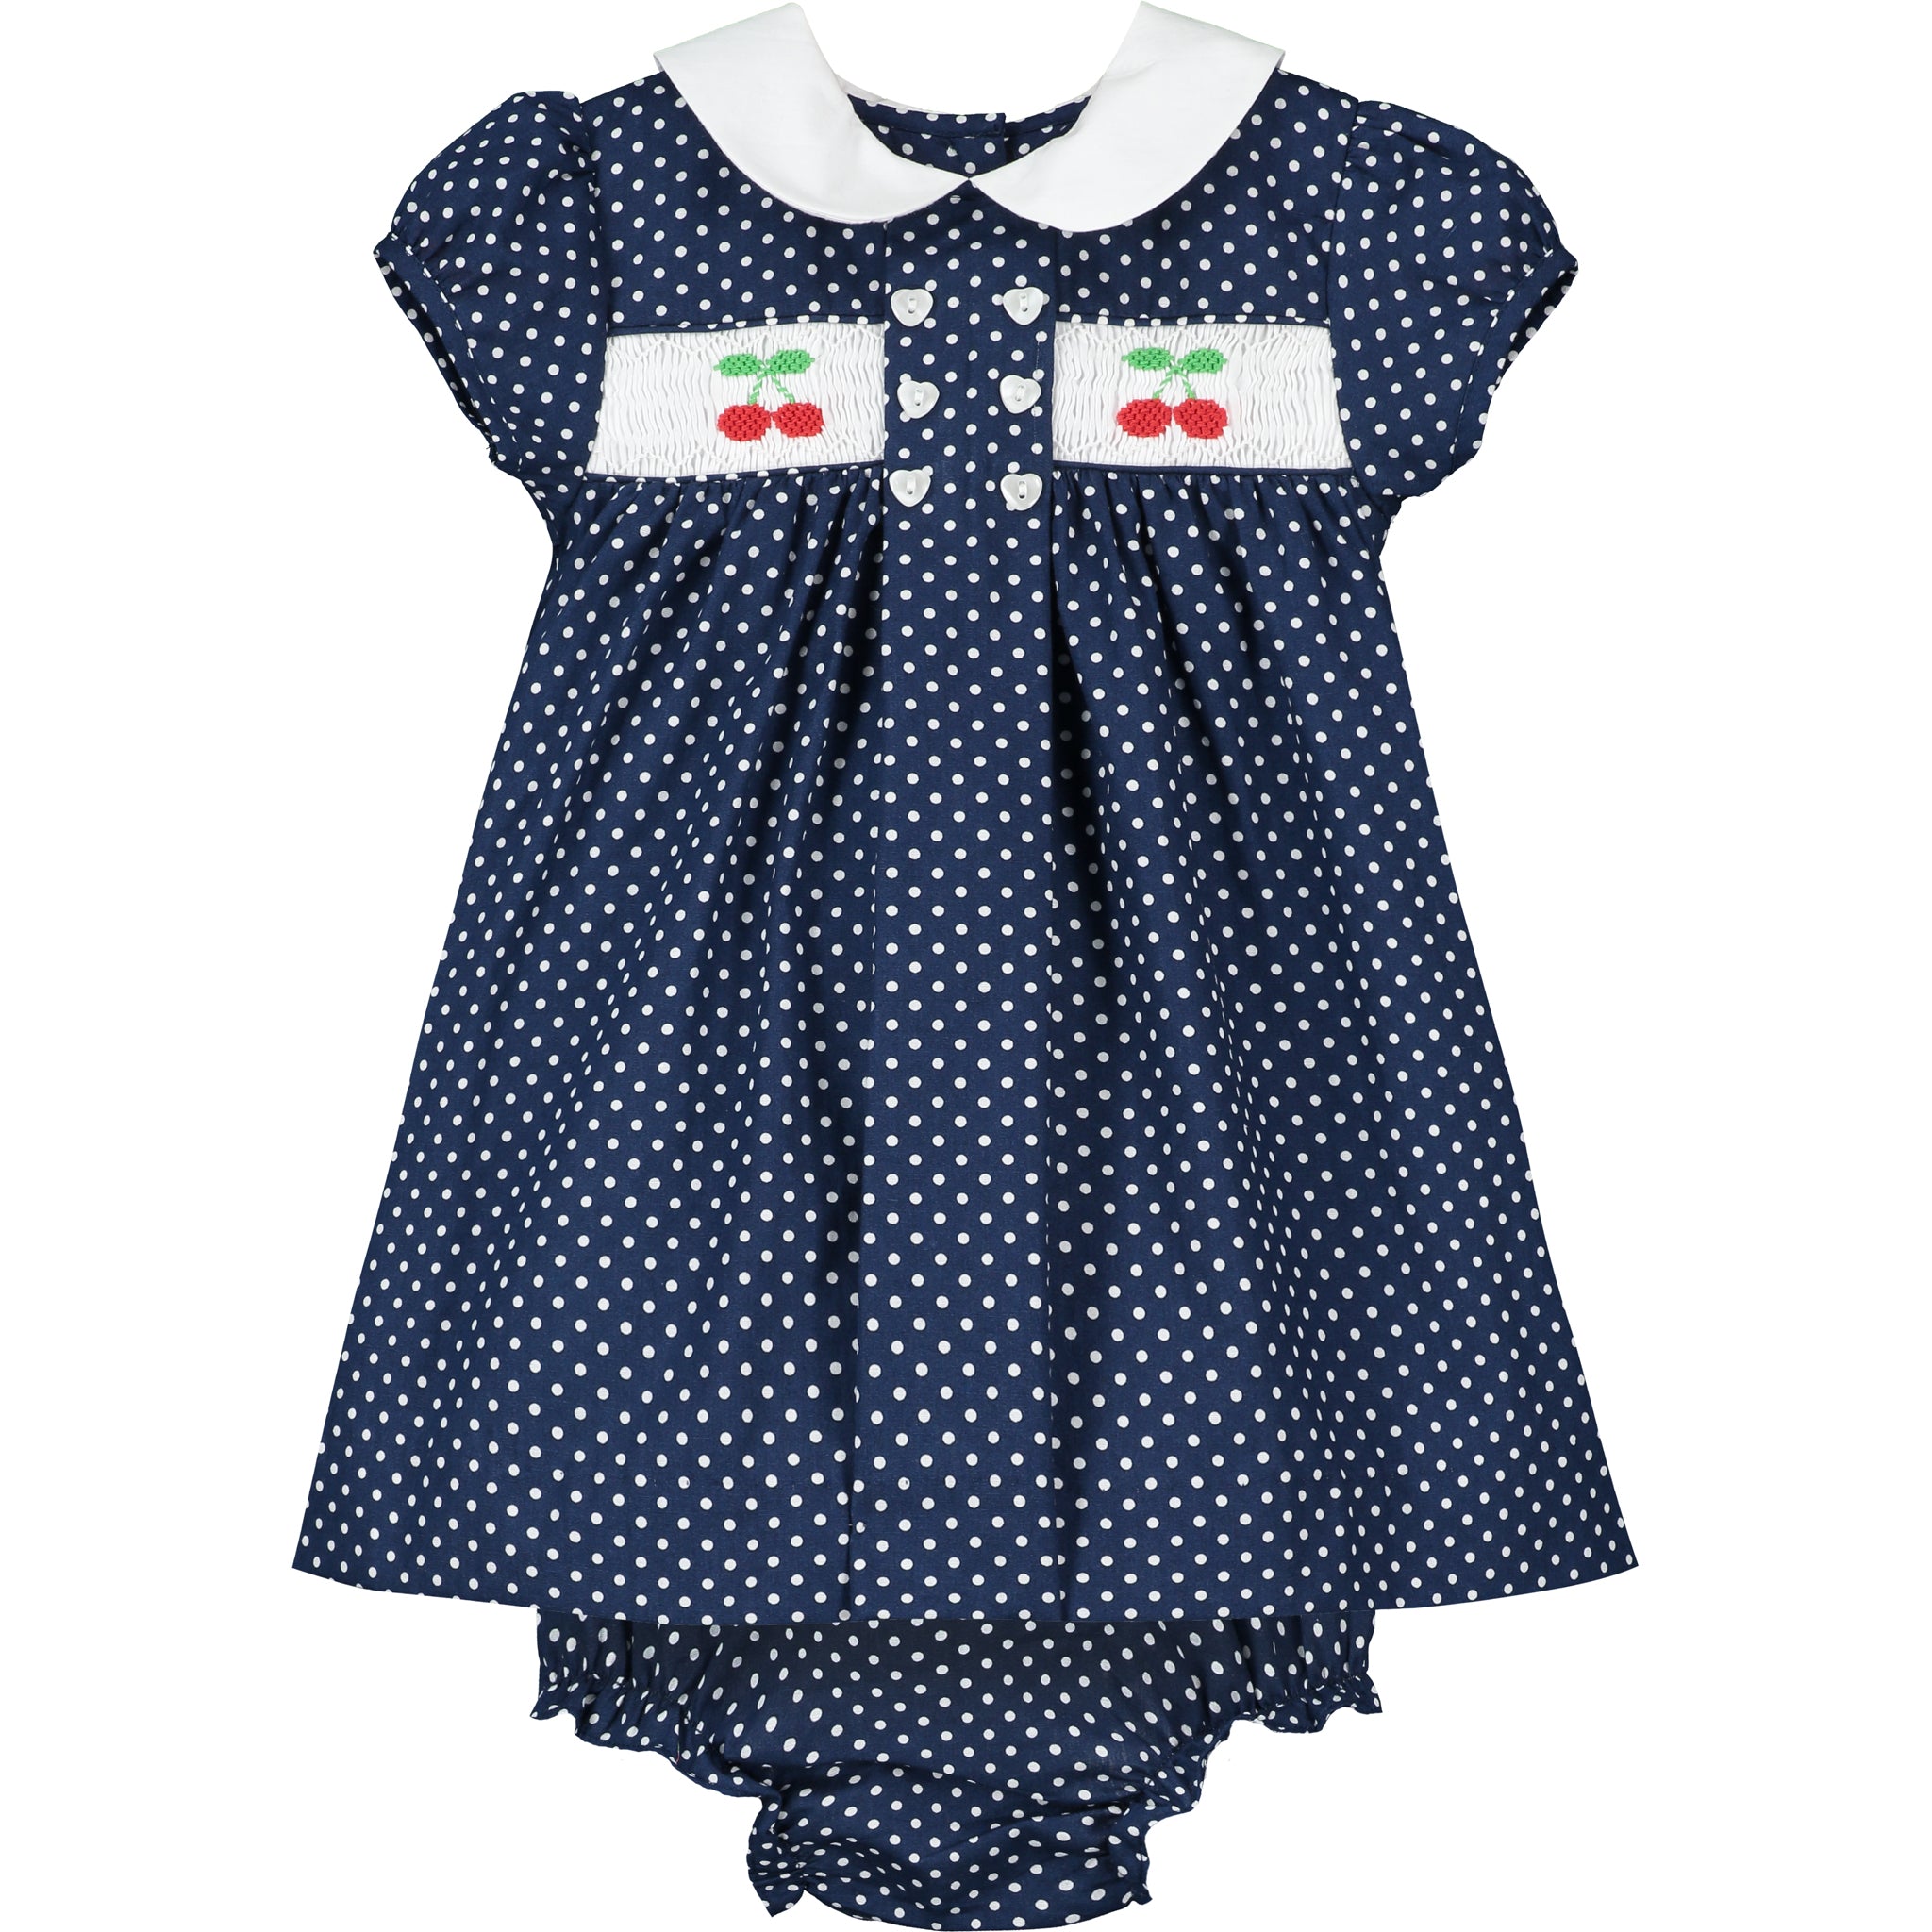 navy polka dot smocked baby dress with cherry motive embroidery